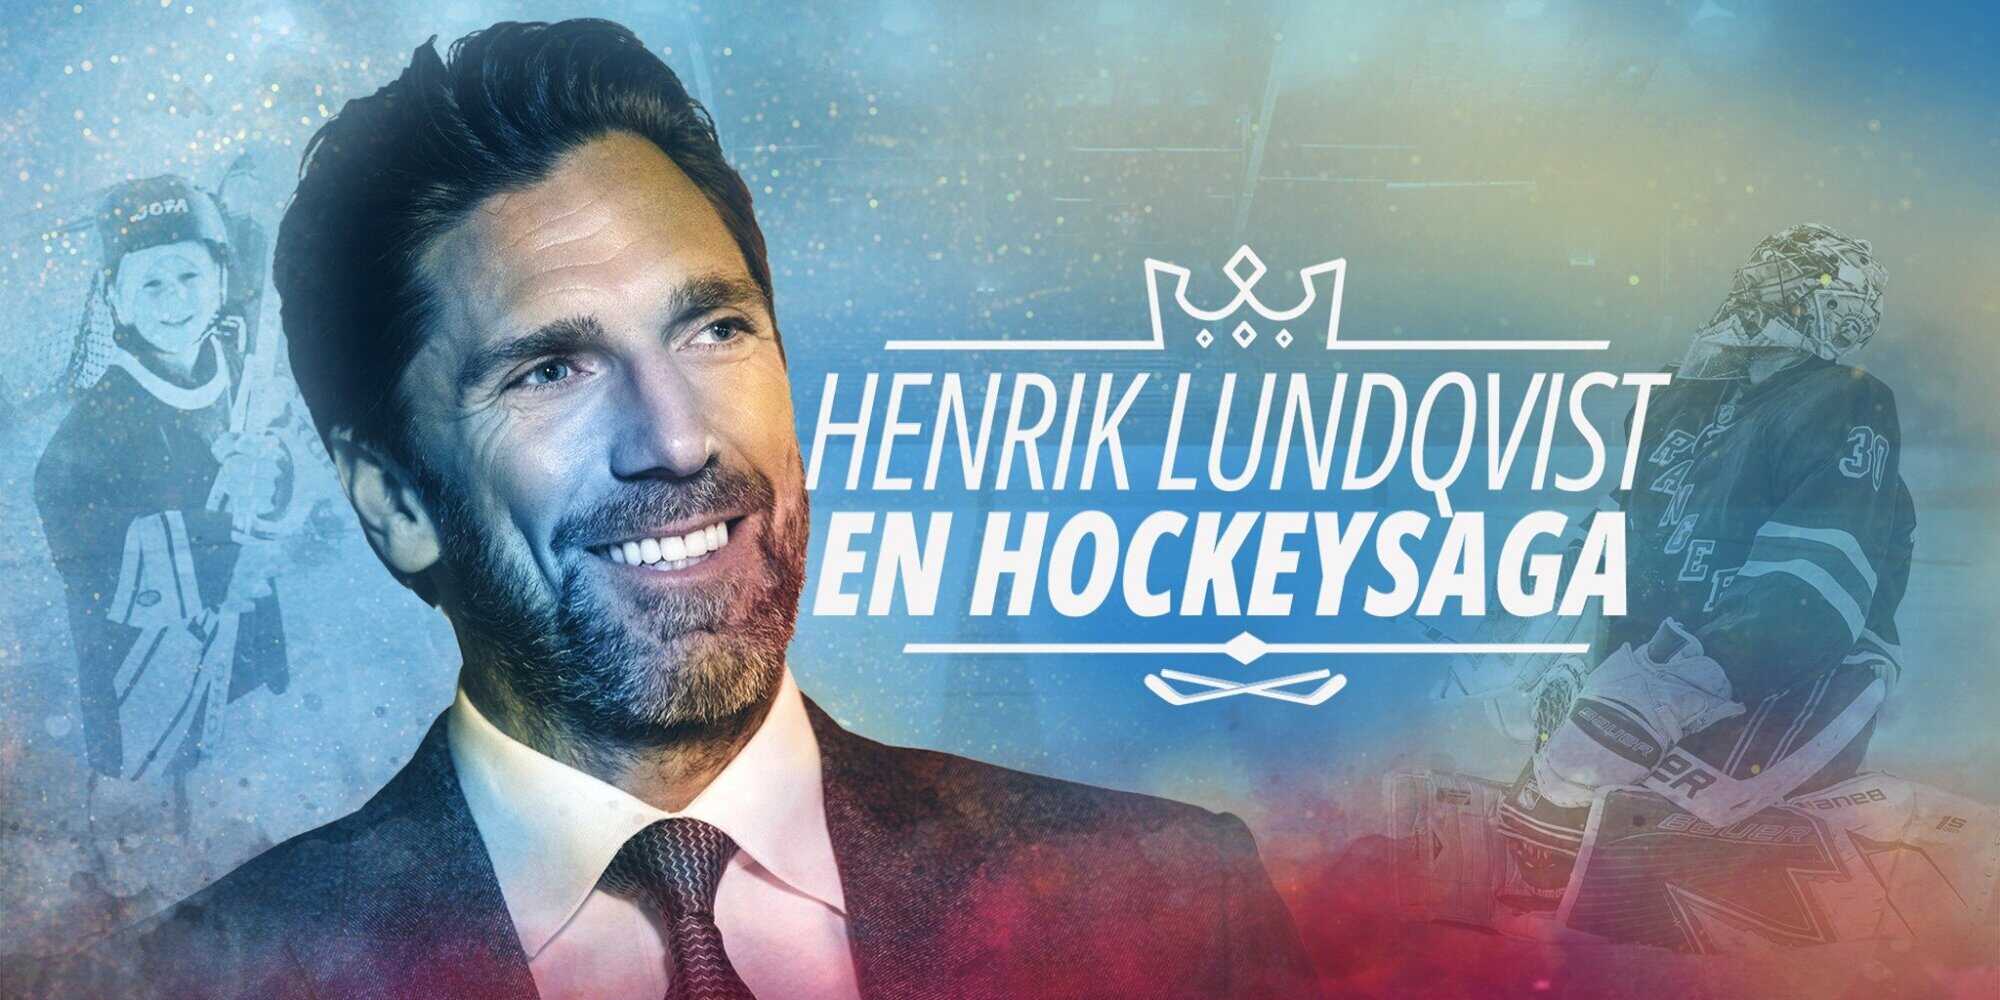 Henrik Lundqvist - IMDb